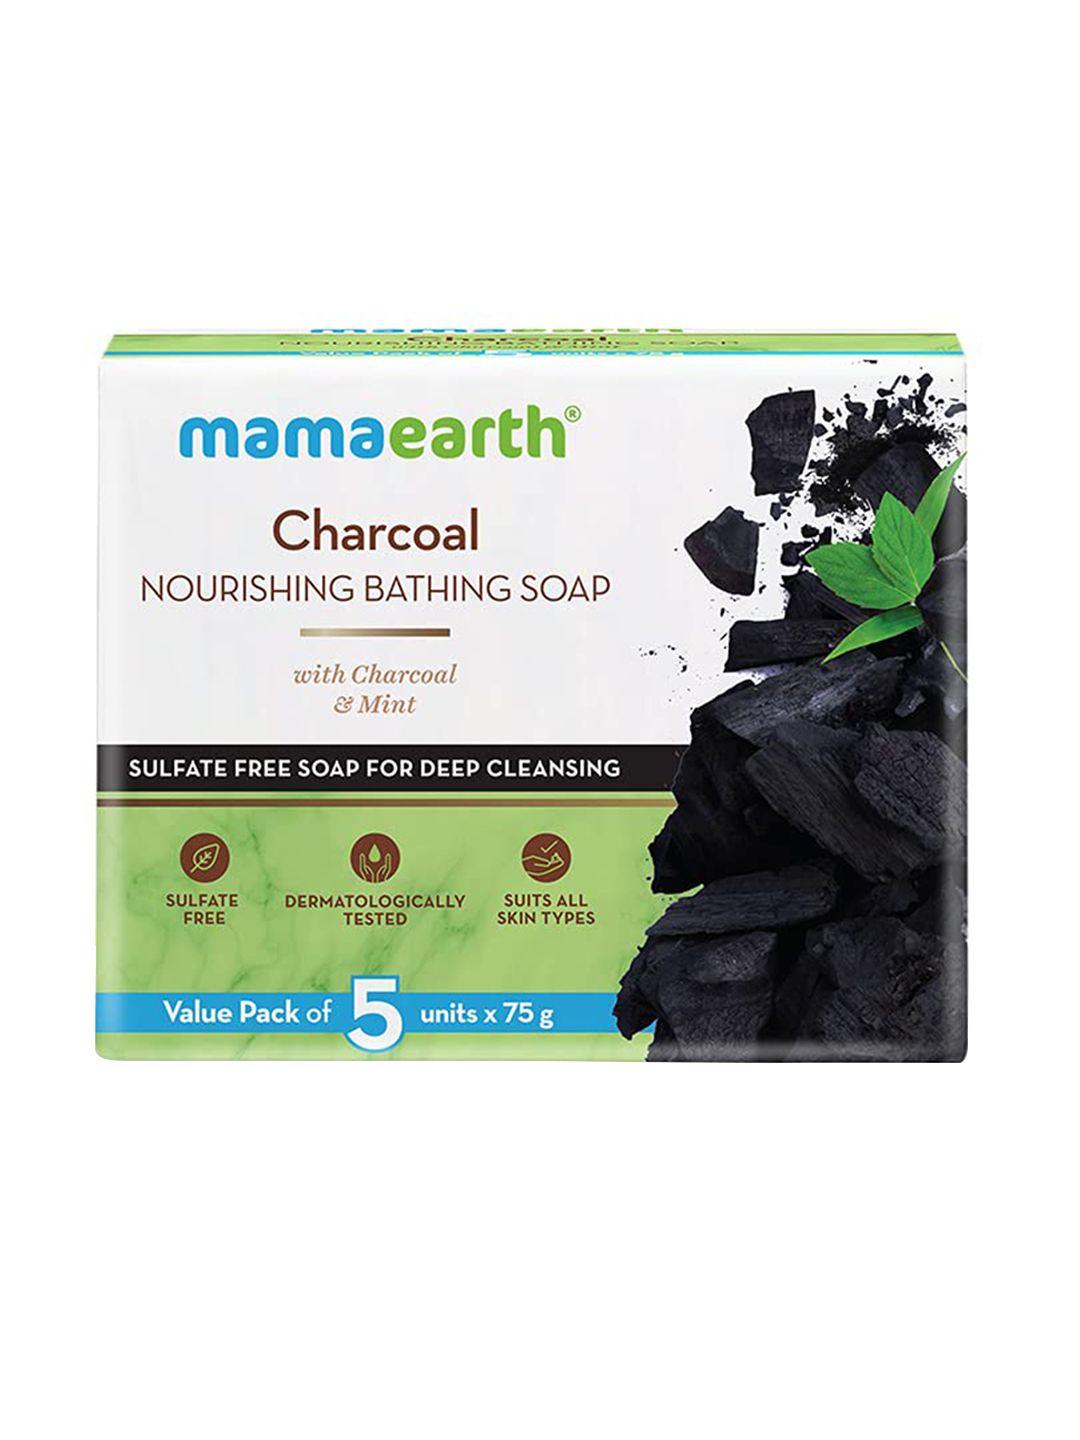 mamaearth black charcoal nourishing bathing soap 75g